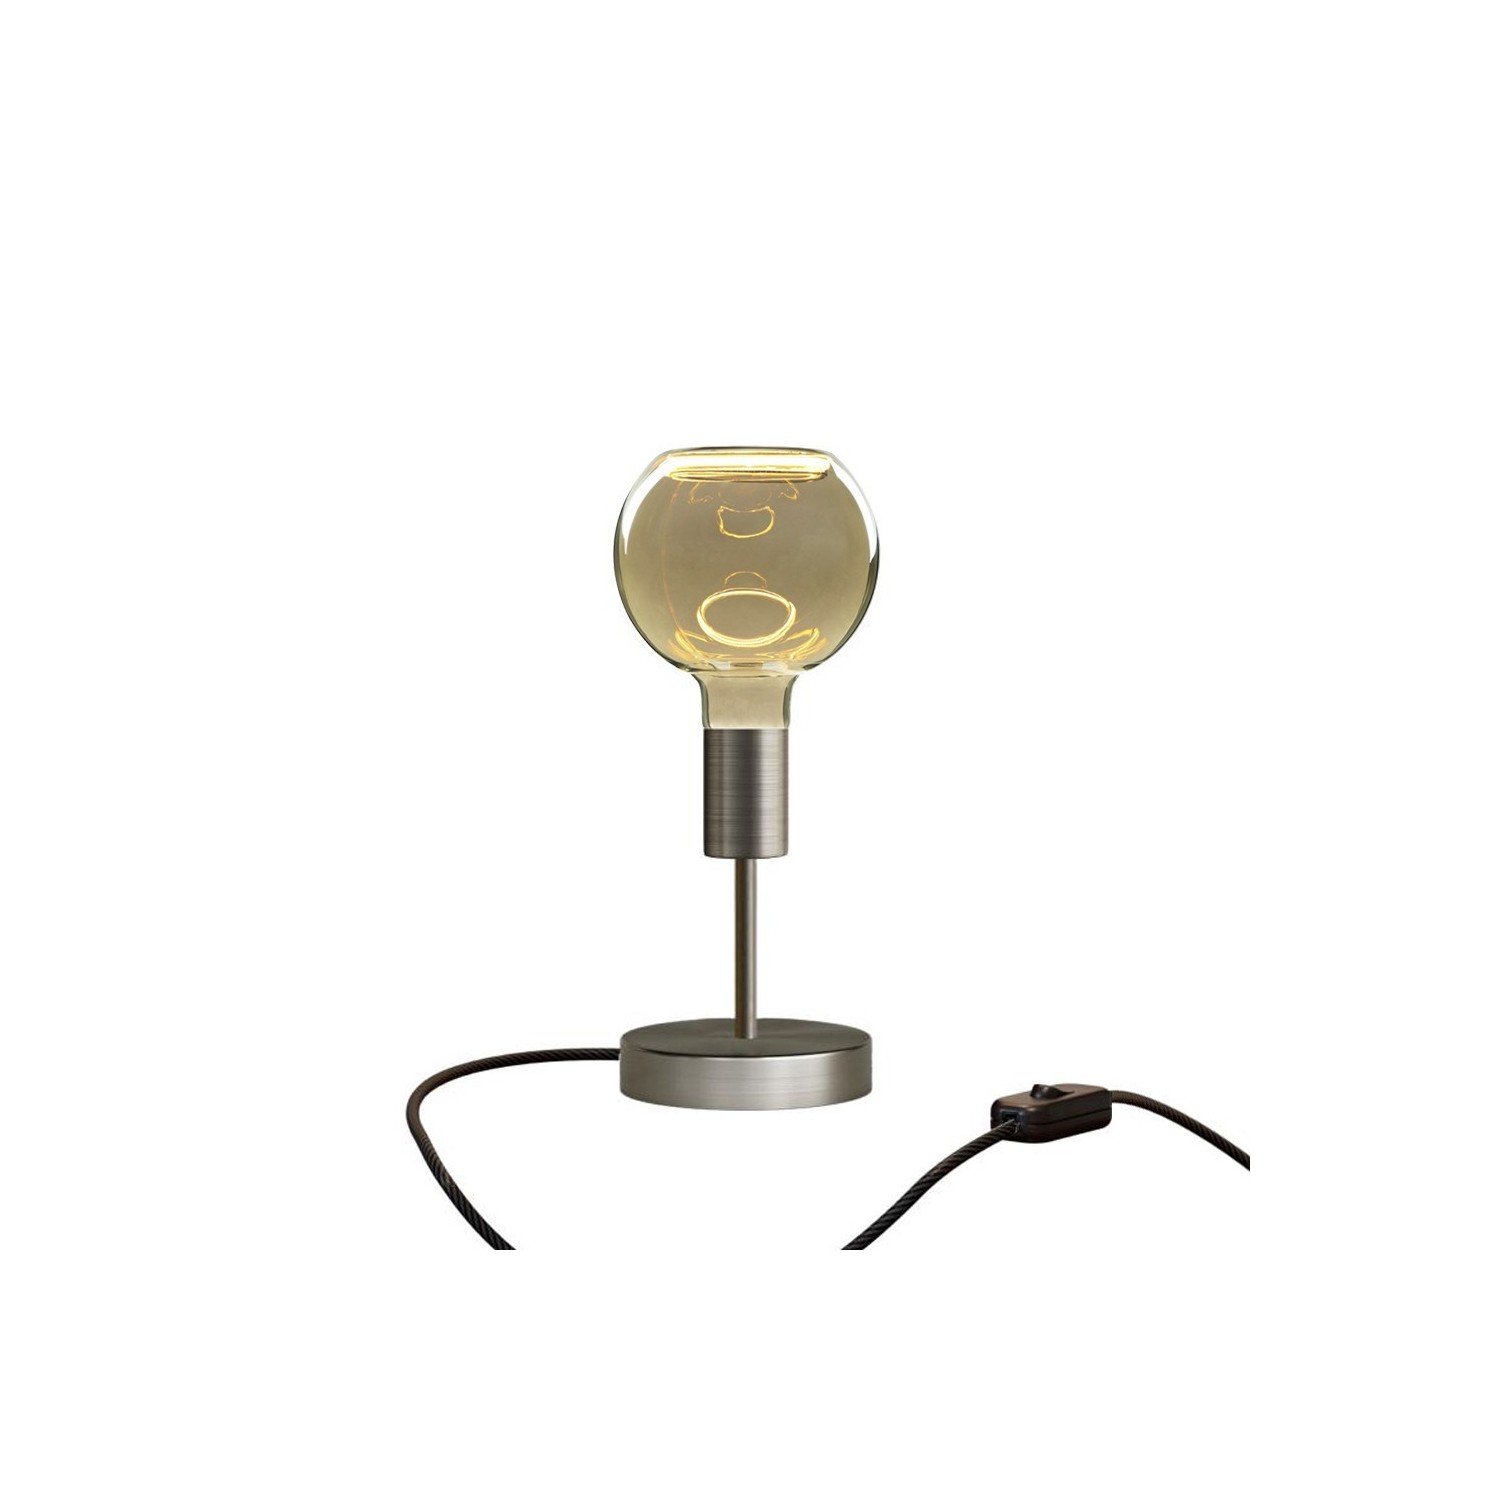 Alzaluce Globe Floating Metal Table Lamp